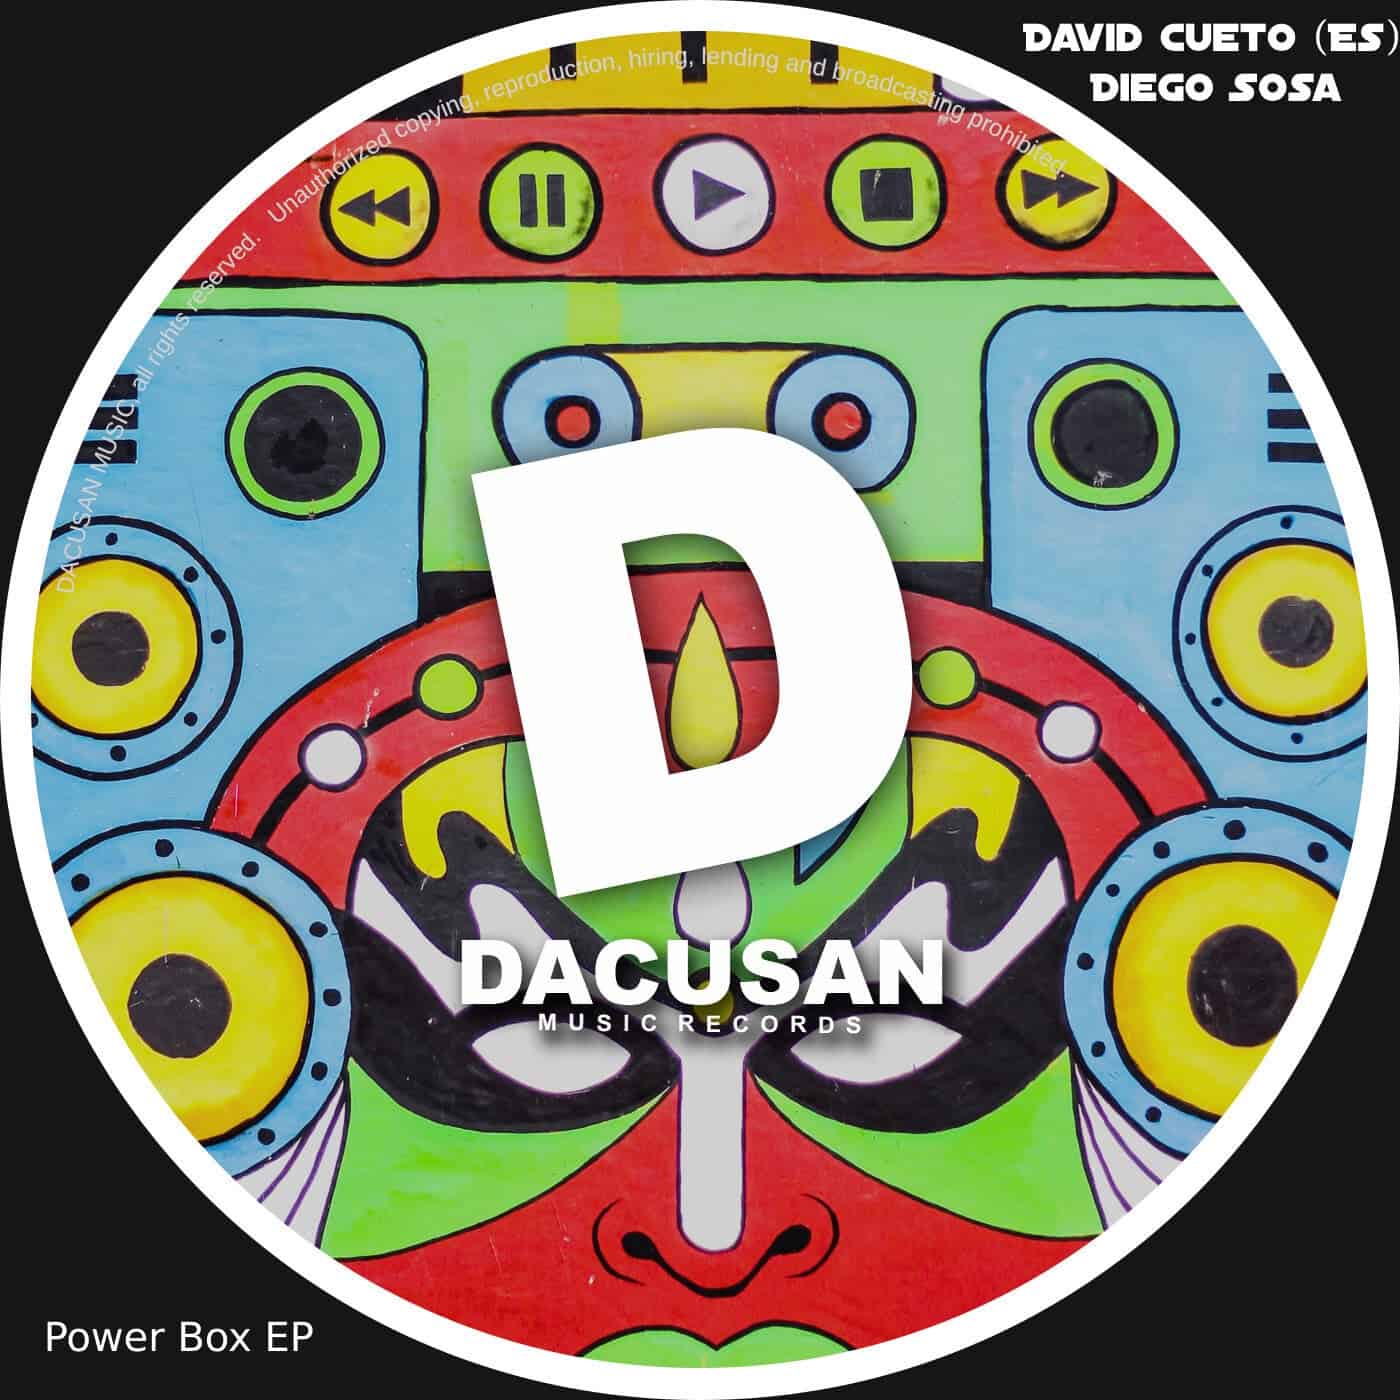 Release Cover: David Cueto (ES), Diego Sosa - Power Box EP on Electrobuzz